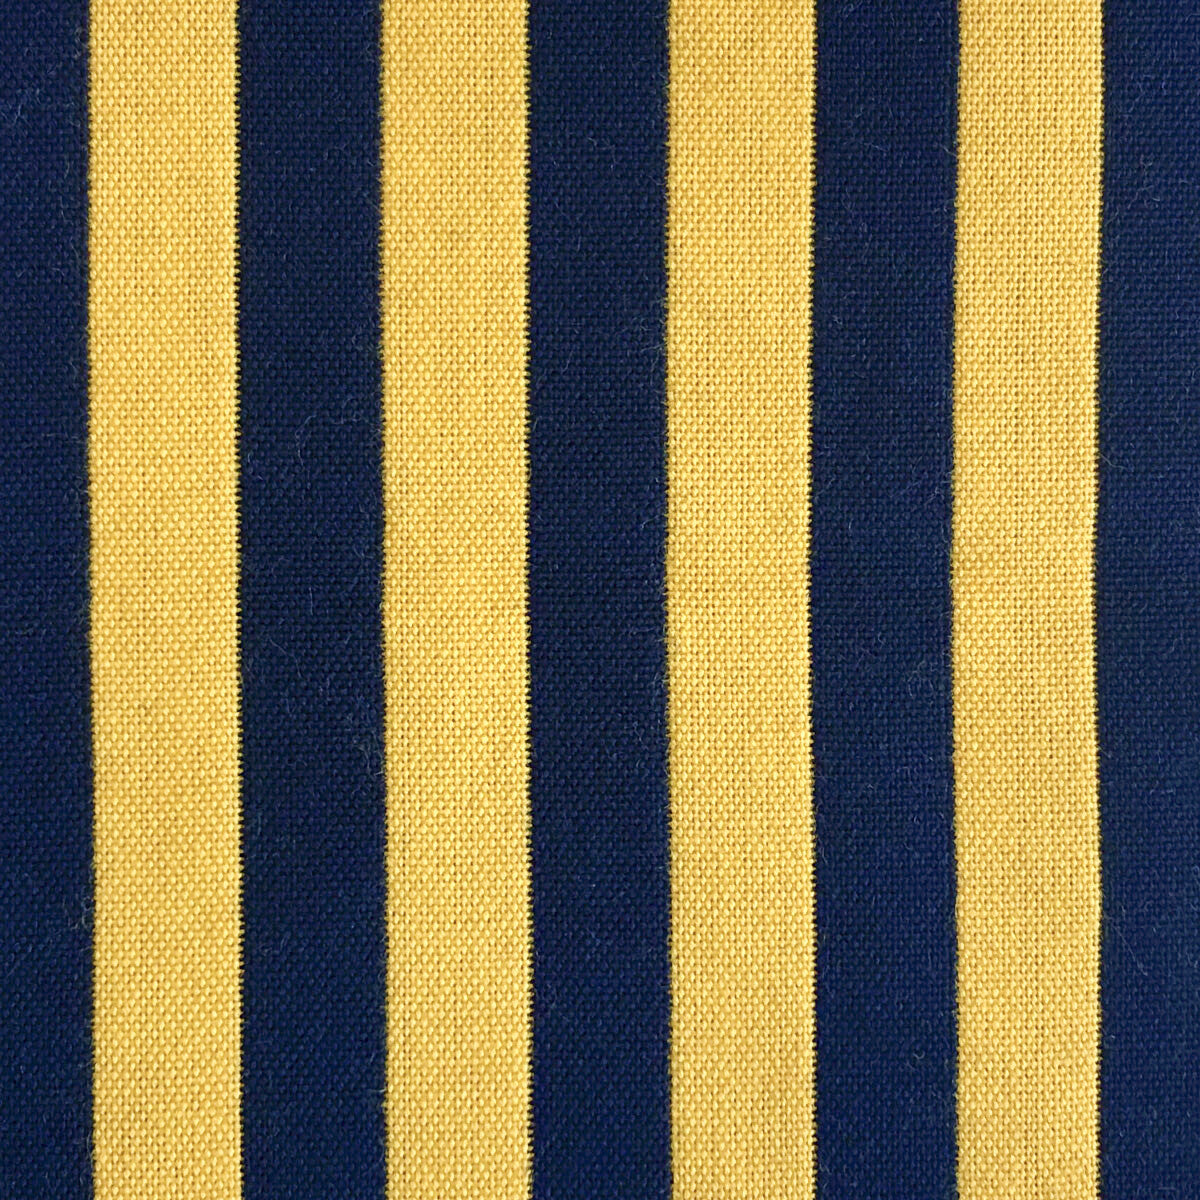 Benjamin fabric in amarillo/navy color - pattern LCT1057.004.0 - by Gaston y Daniela in the Lorenzo Castillo VI collection